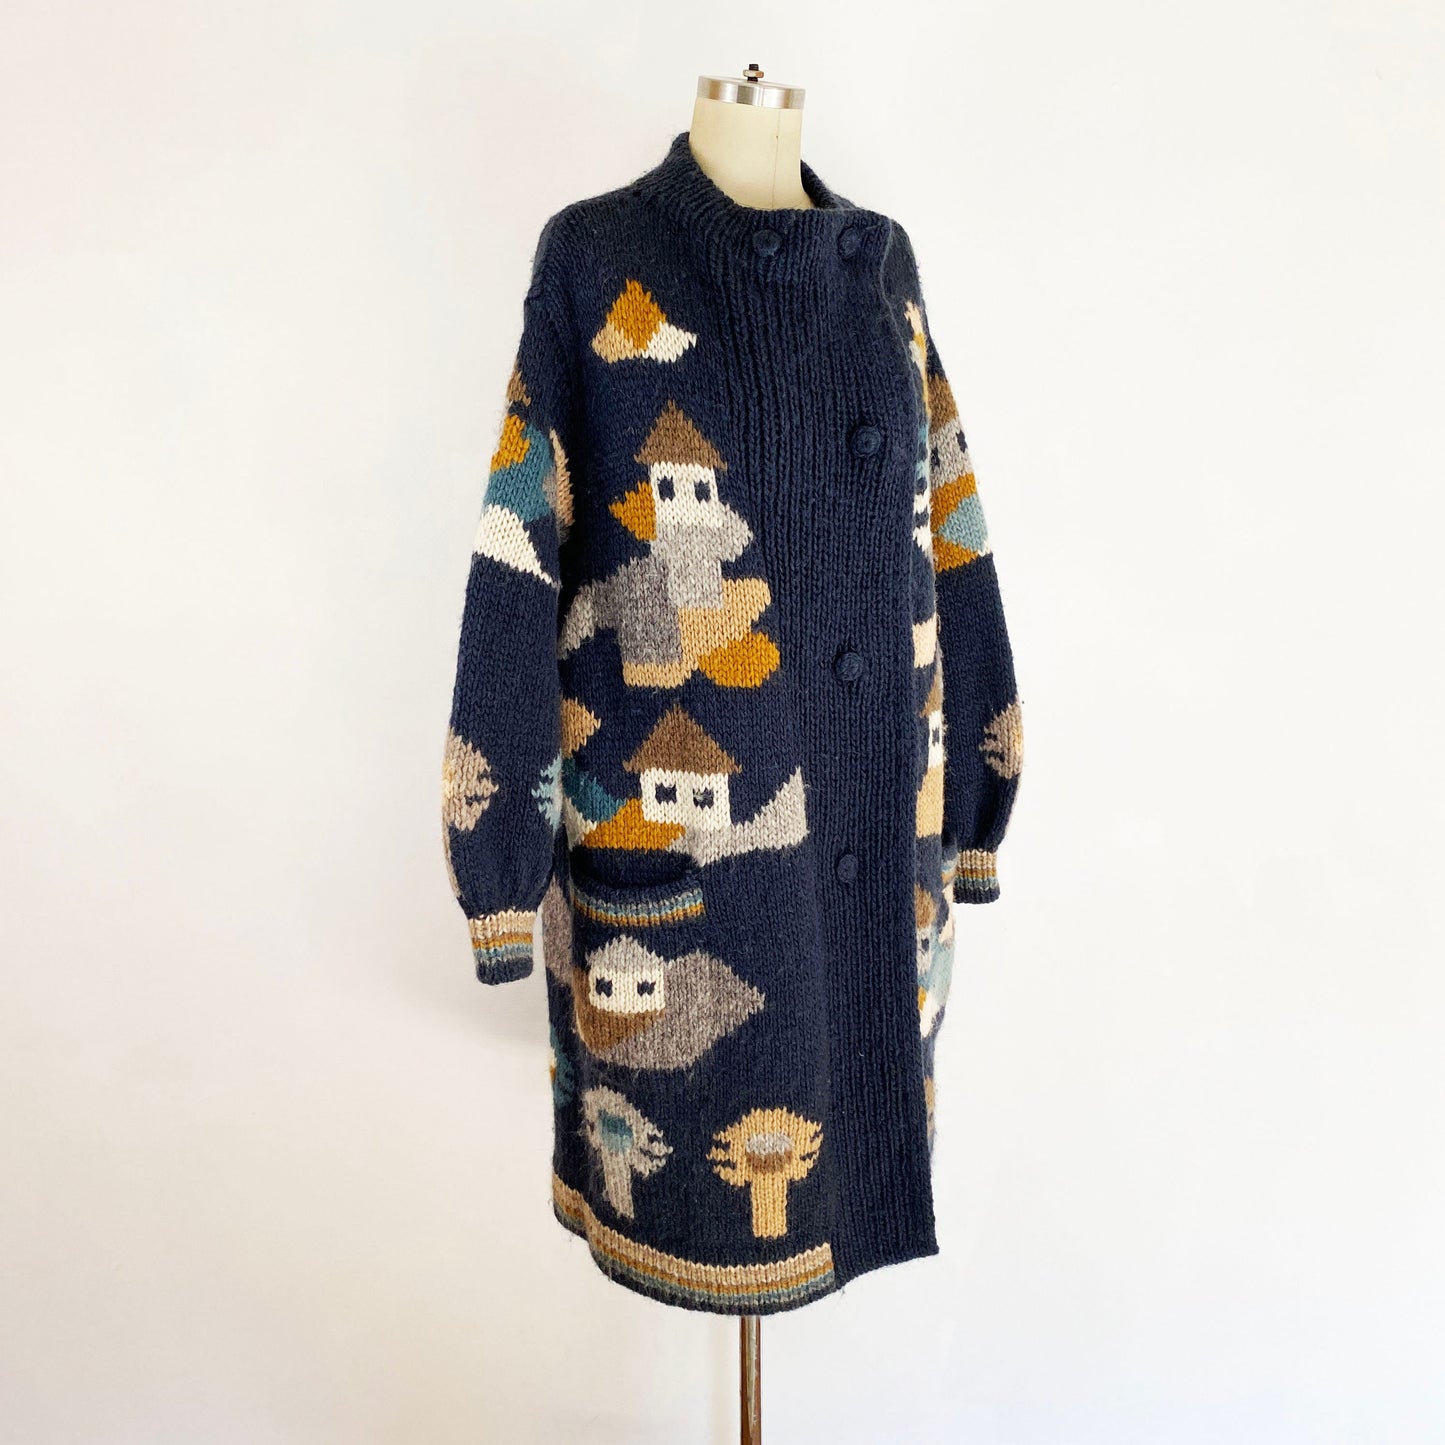 1980s Intarsia Landscape Wool Long Cardigan House Pattern Sirogojno Sweater Dobrila Wool Jacket Folk Chunky Sweater / Size Extra Large XL